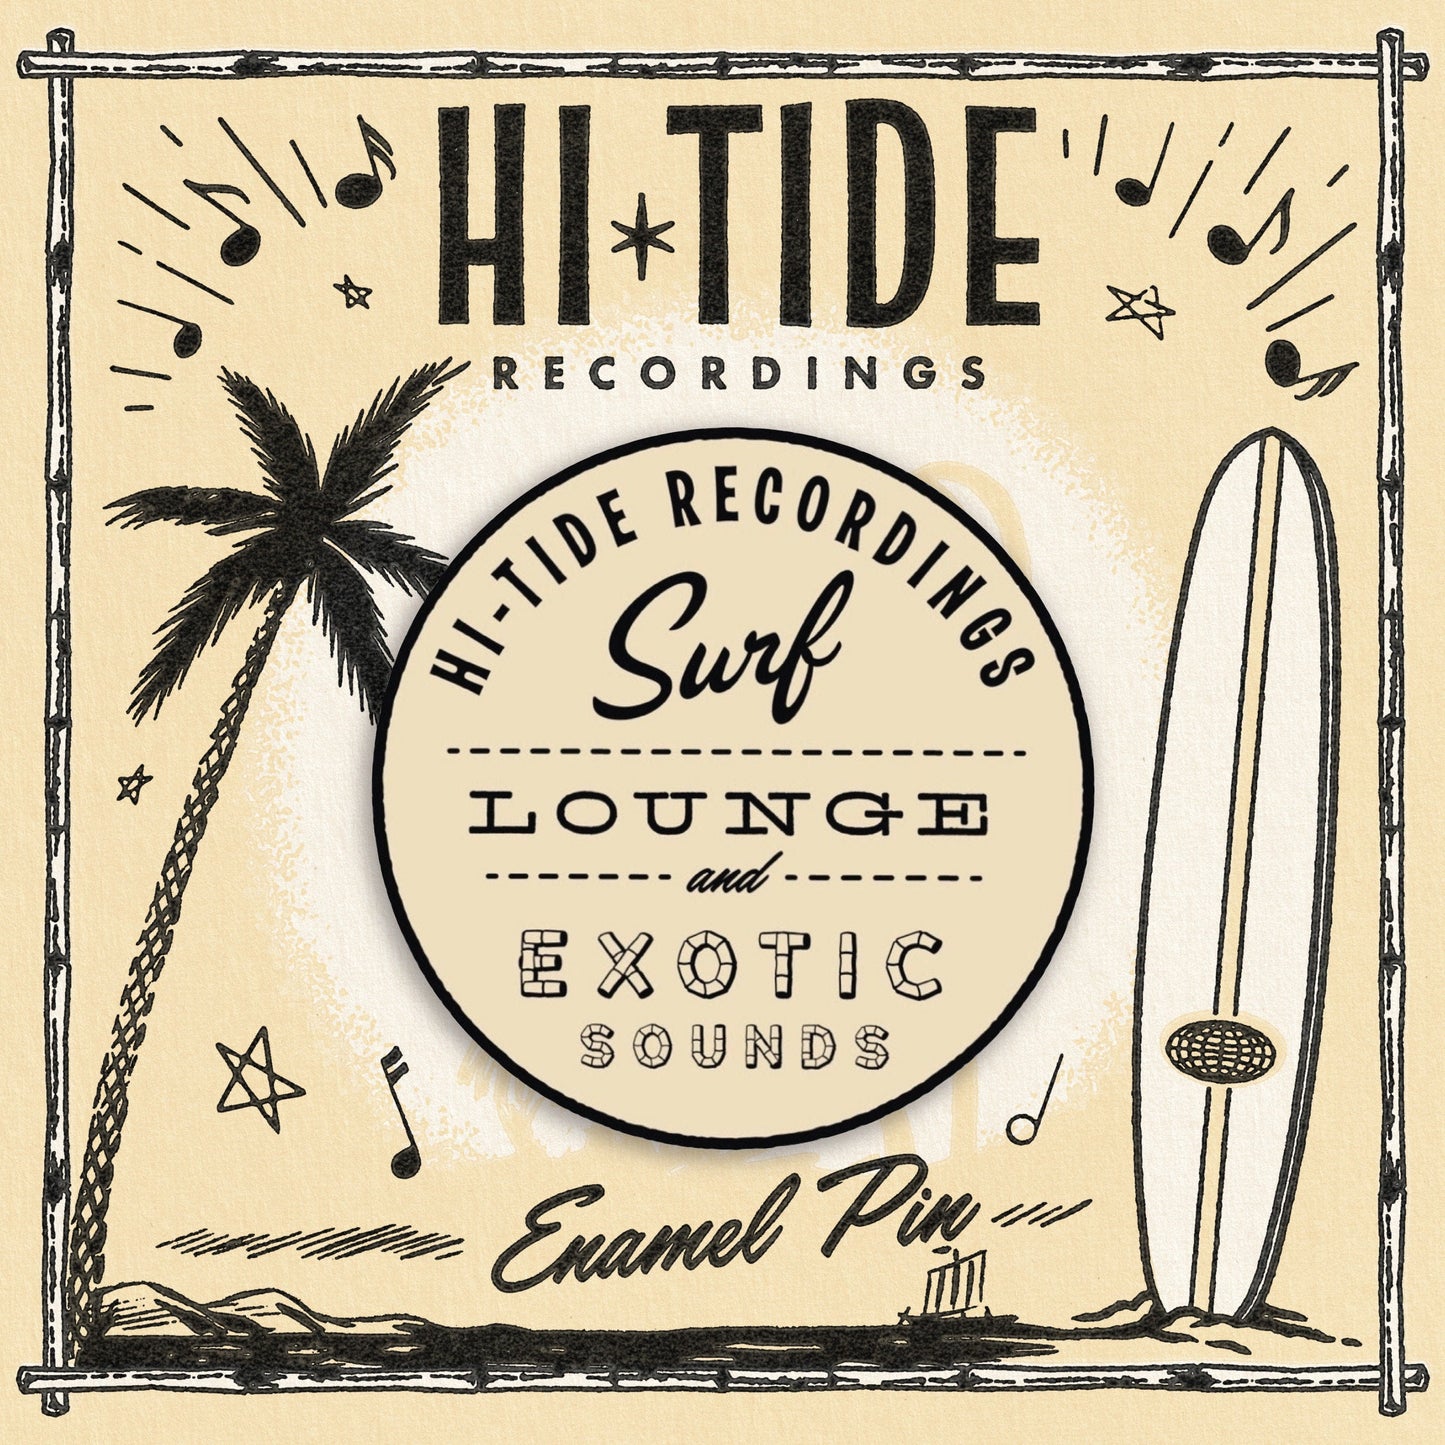 Surf, Lounge & Exotic Sounds II Enamel Pin